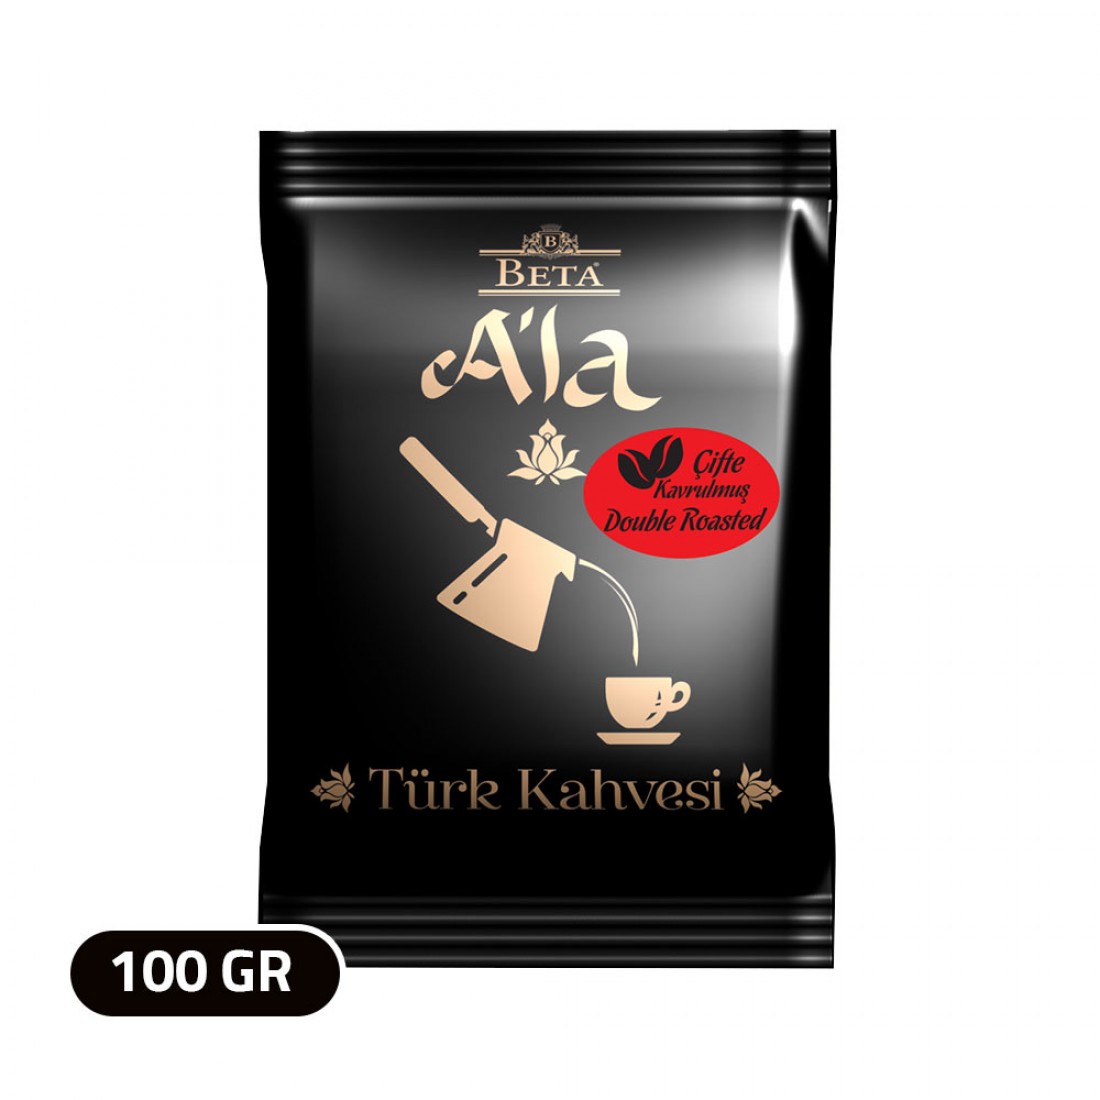 Ала ала на турецком. Турецкий кофе 100 грамм молотый. Турецкий кофе 100г. Beta Tea чай турецкий. Ala кофе.